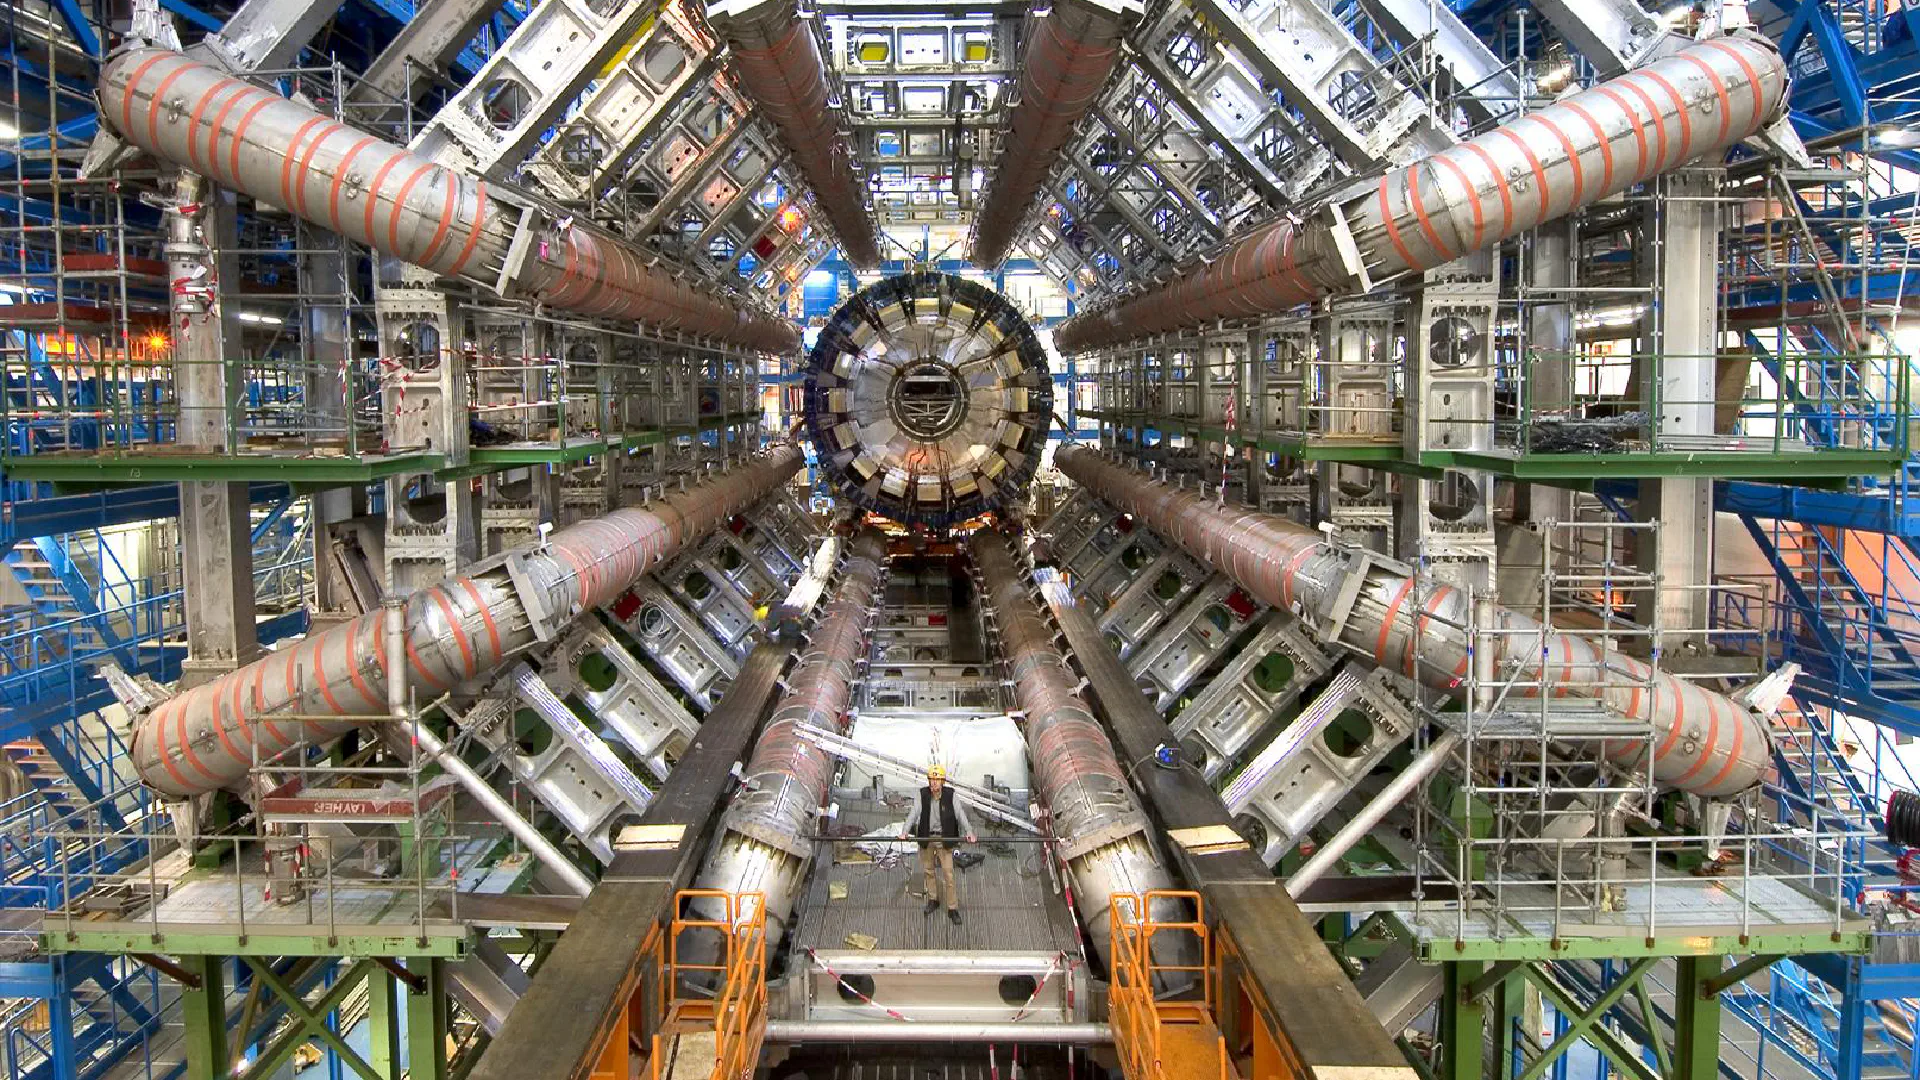 ATLAS at the LHC